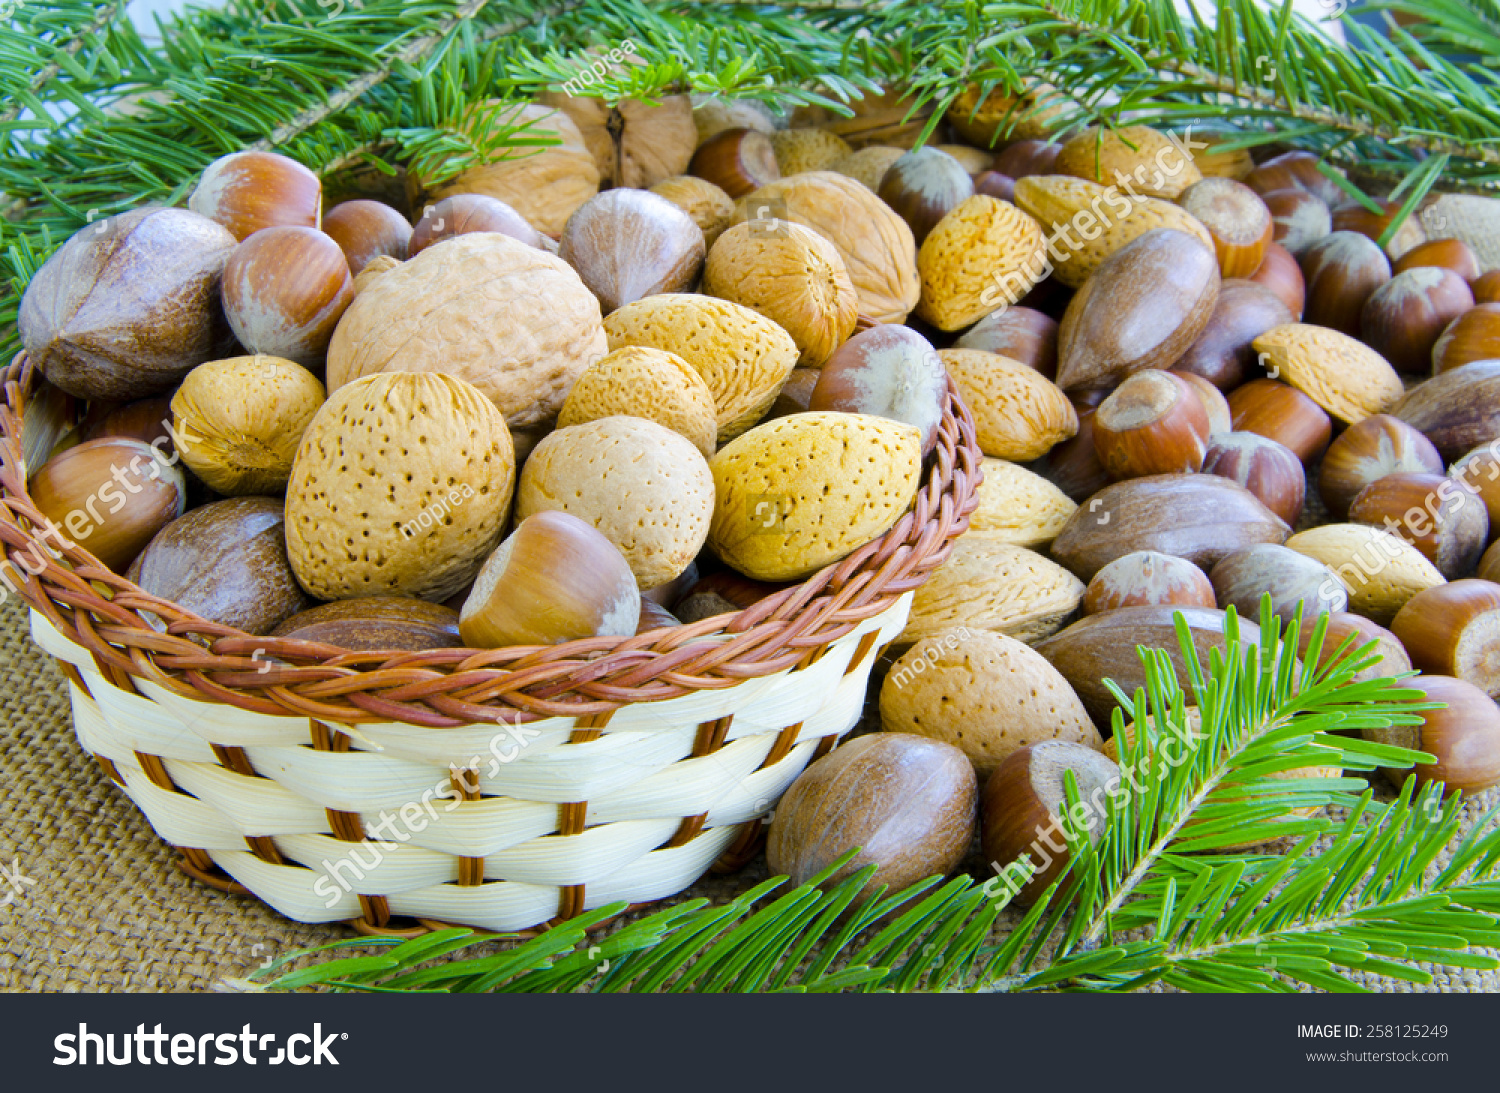 Variety Mixed Nuts Fir Branch Stock Photo 258125249 - Shutterstock